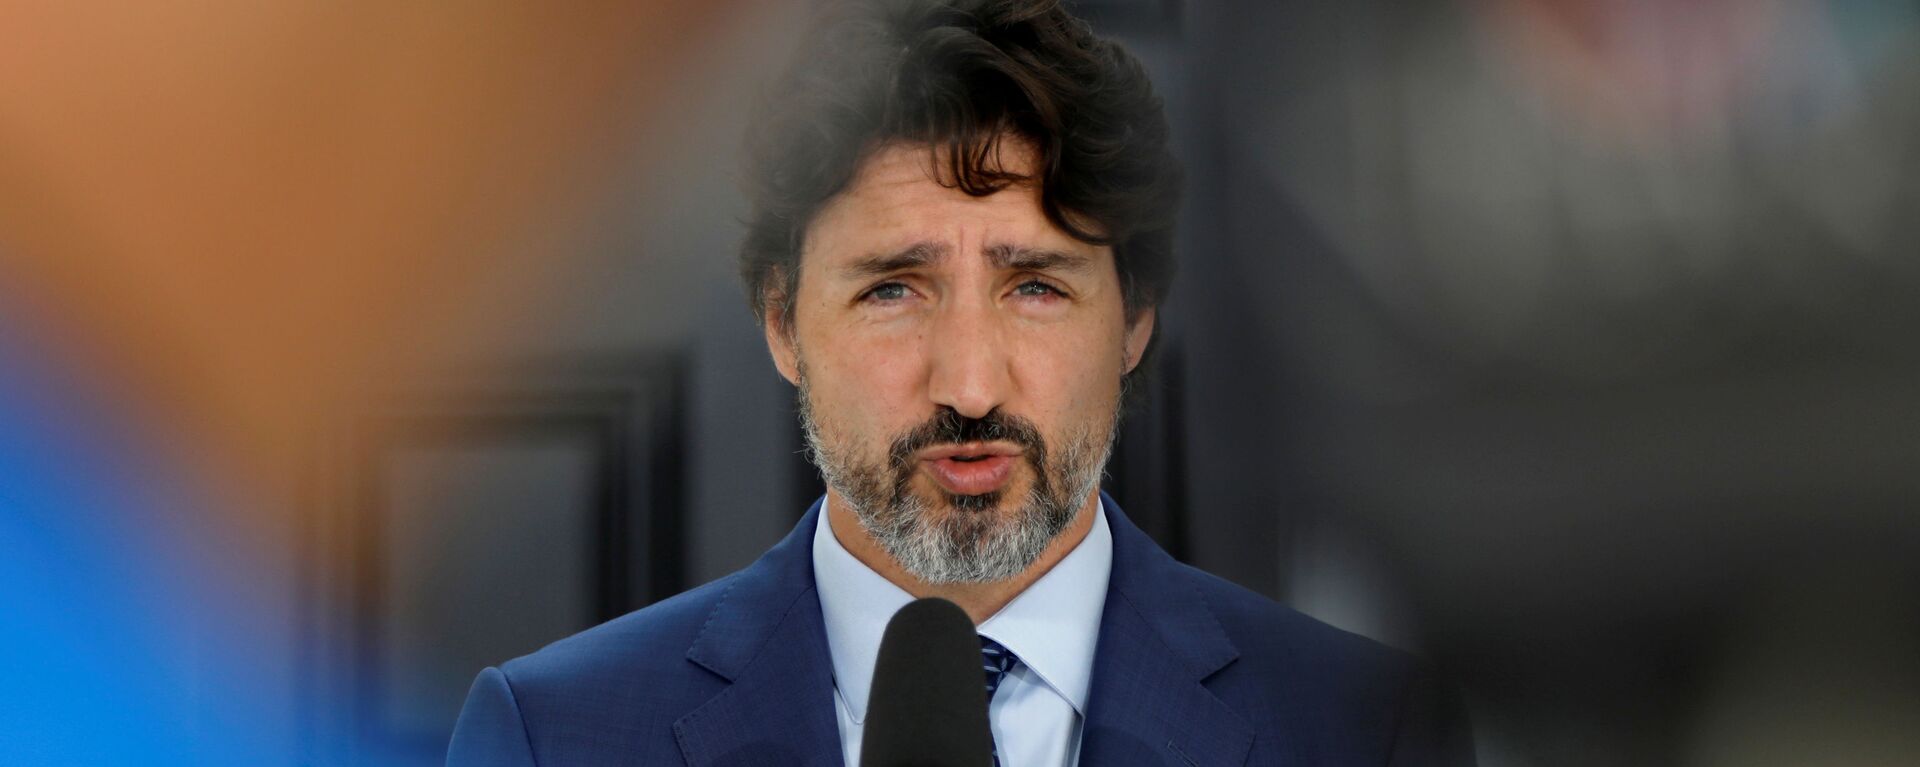 Justin Trudeau, primer ministro de Canadá  - Sputnik Mundo, 1920, 03.03.2021